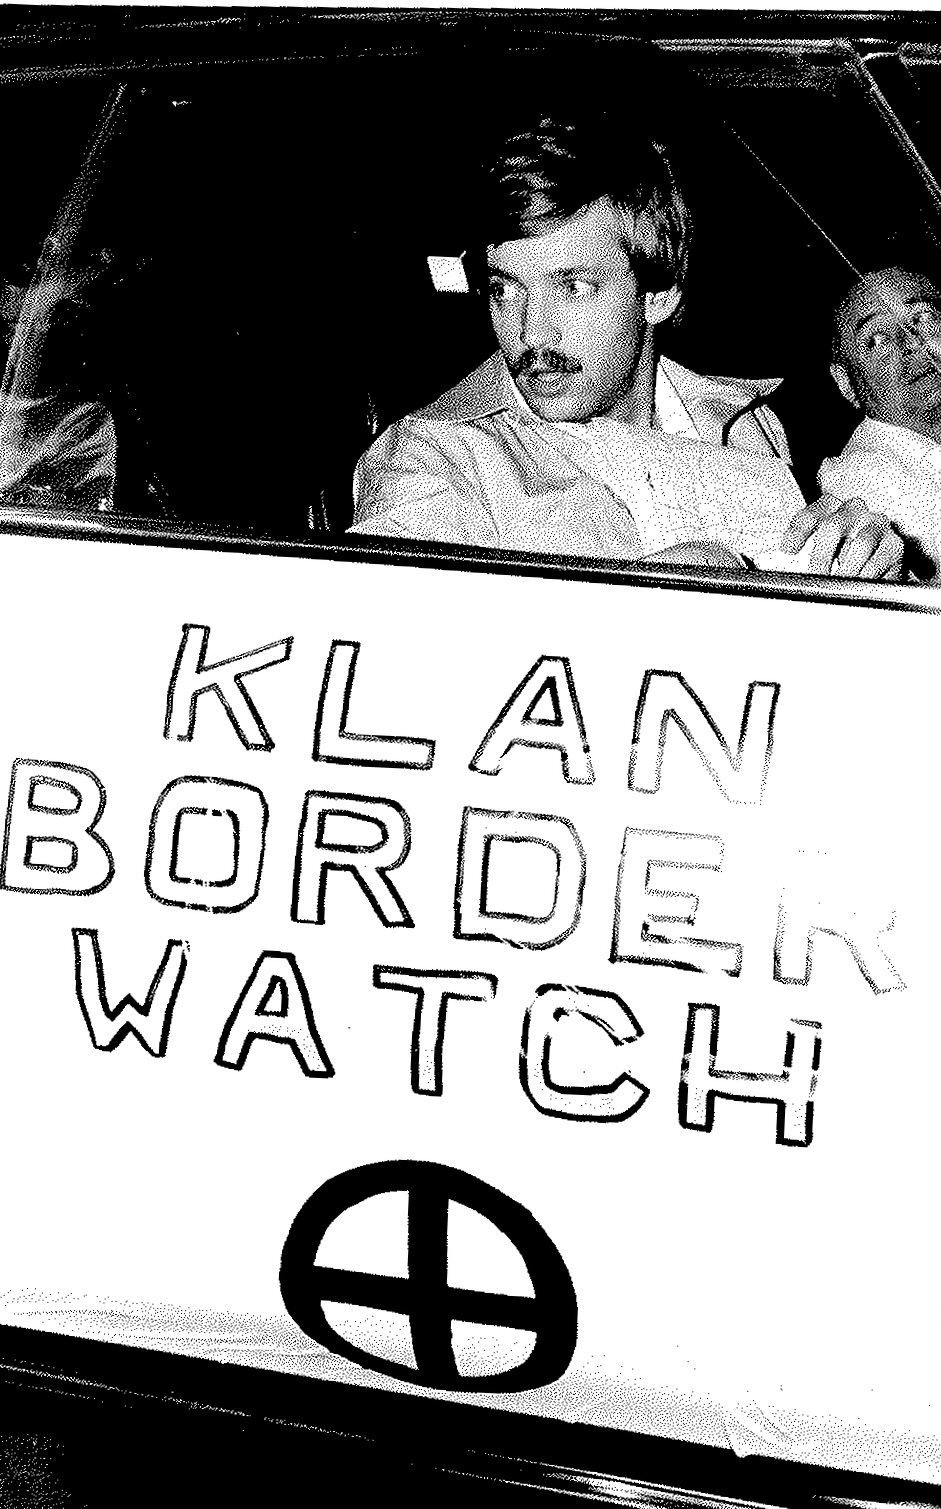 Klu Klux Klan Border Watch sign